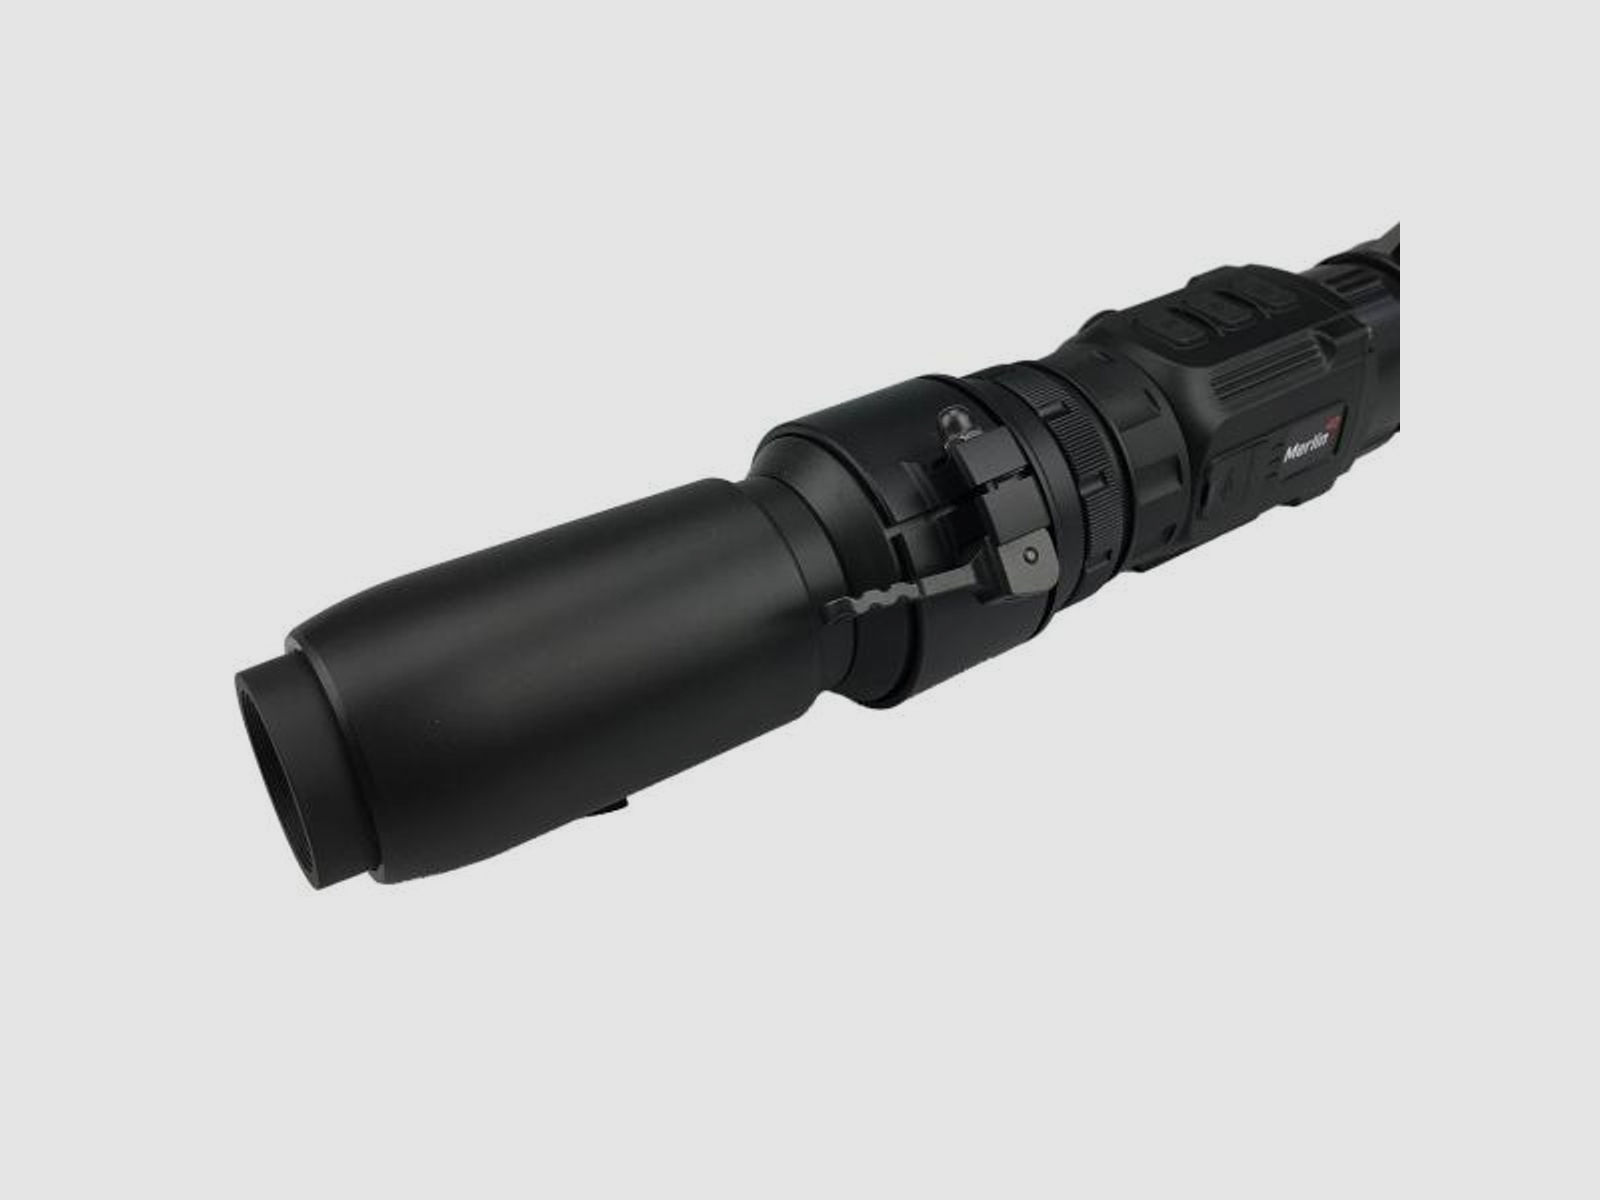 LIEMKE Optik Wärmebild-Kamera Merlin 42 (2020) Dual-Use - Vorsatzgerät